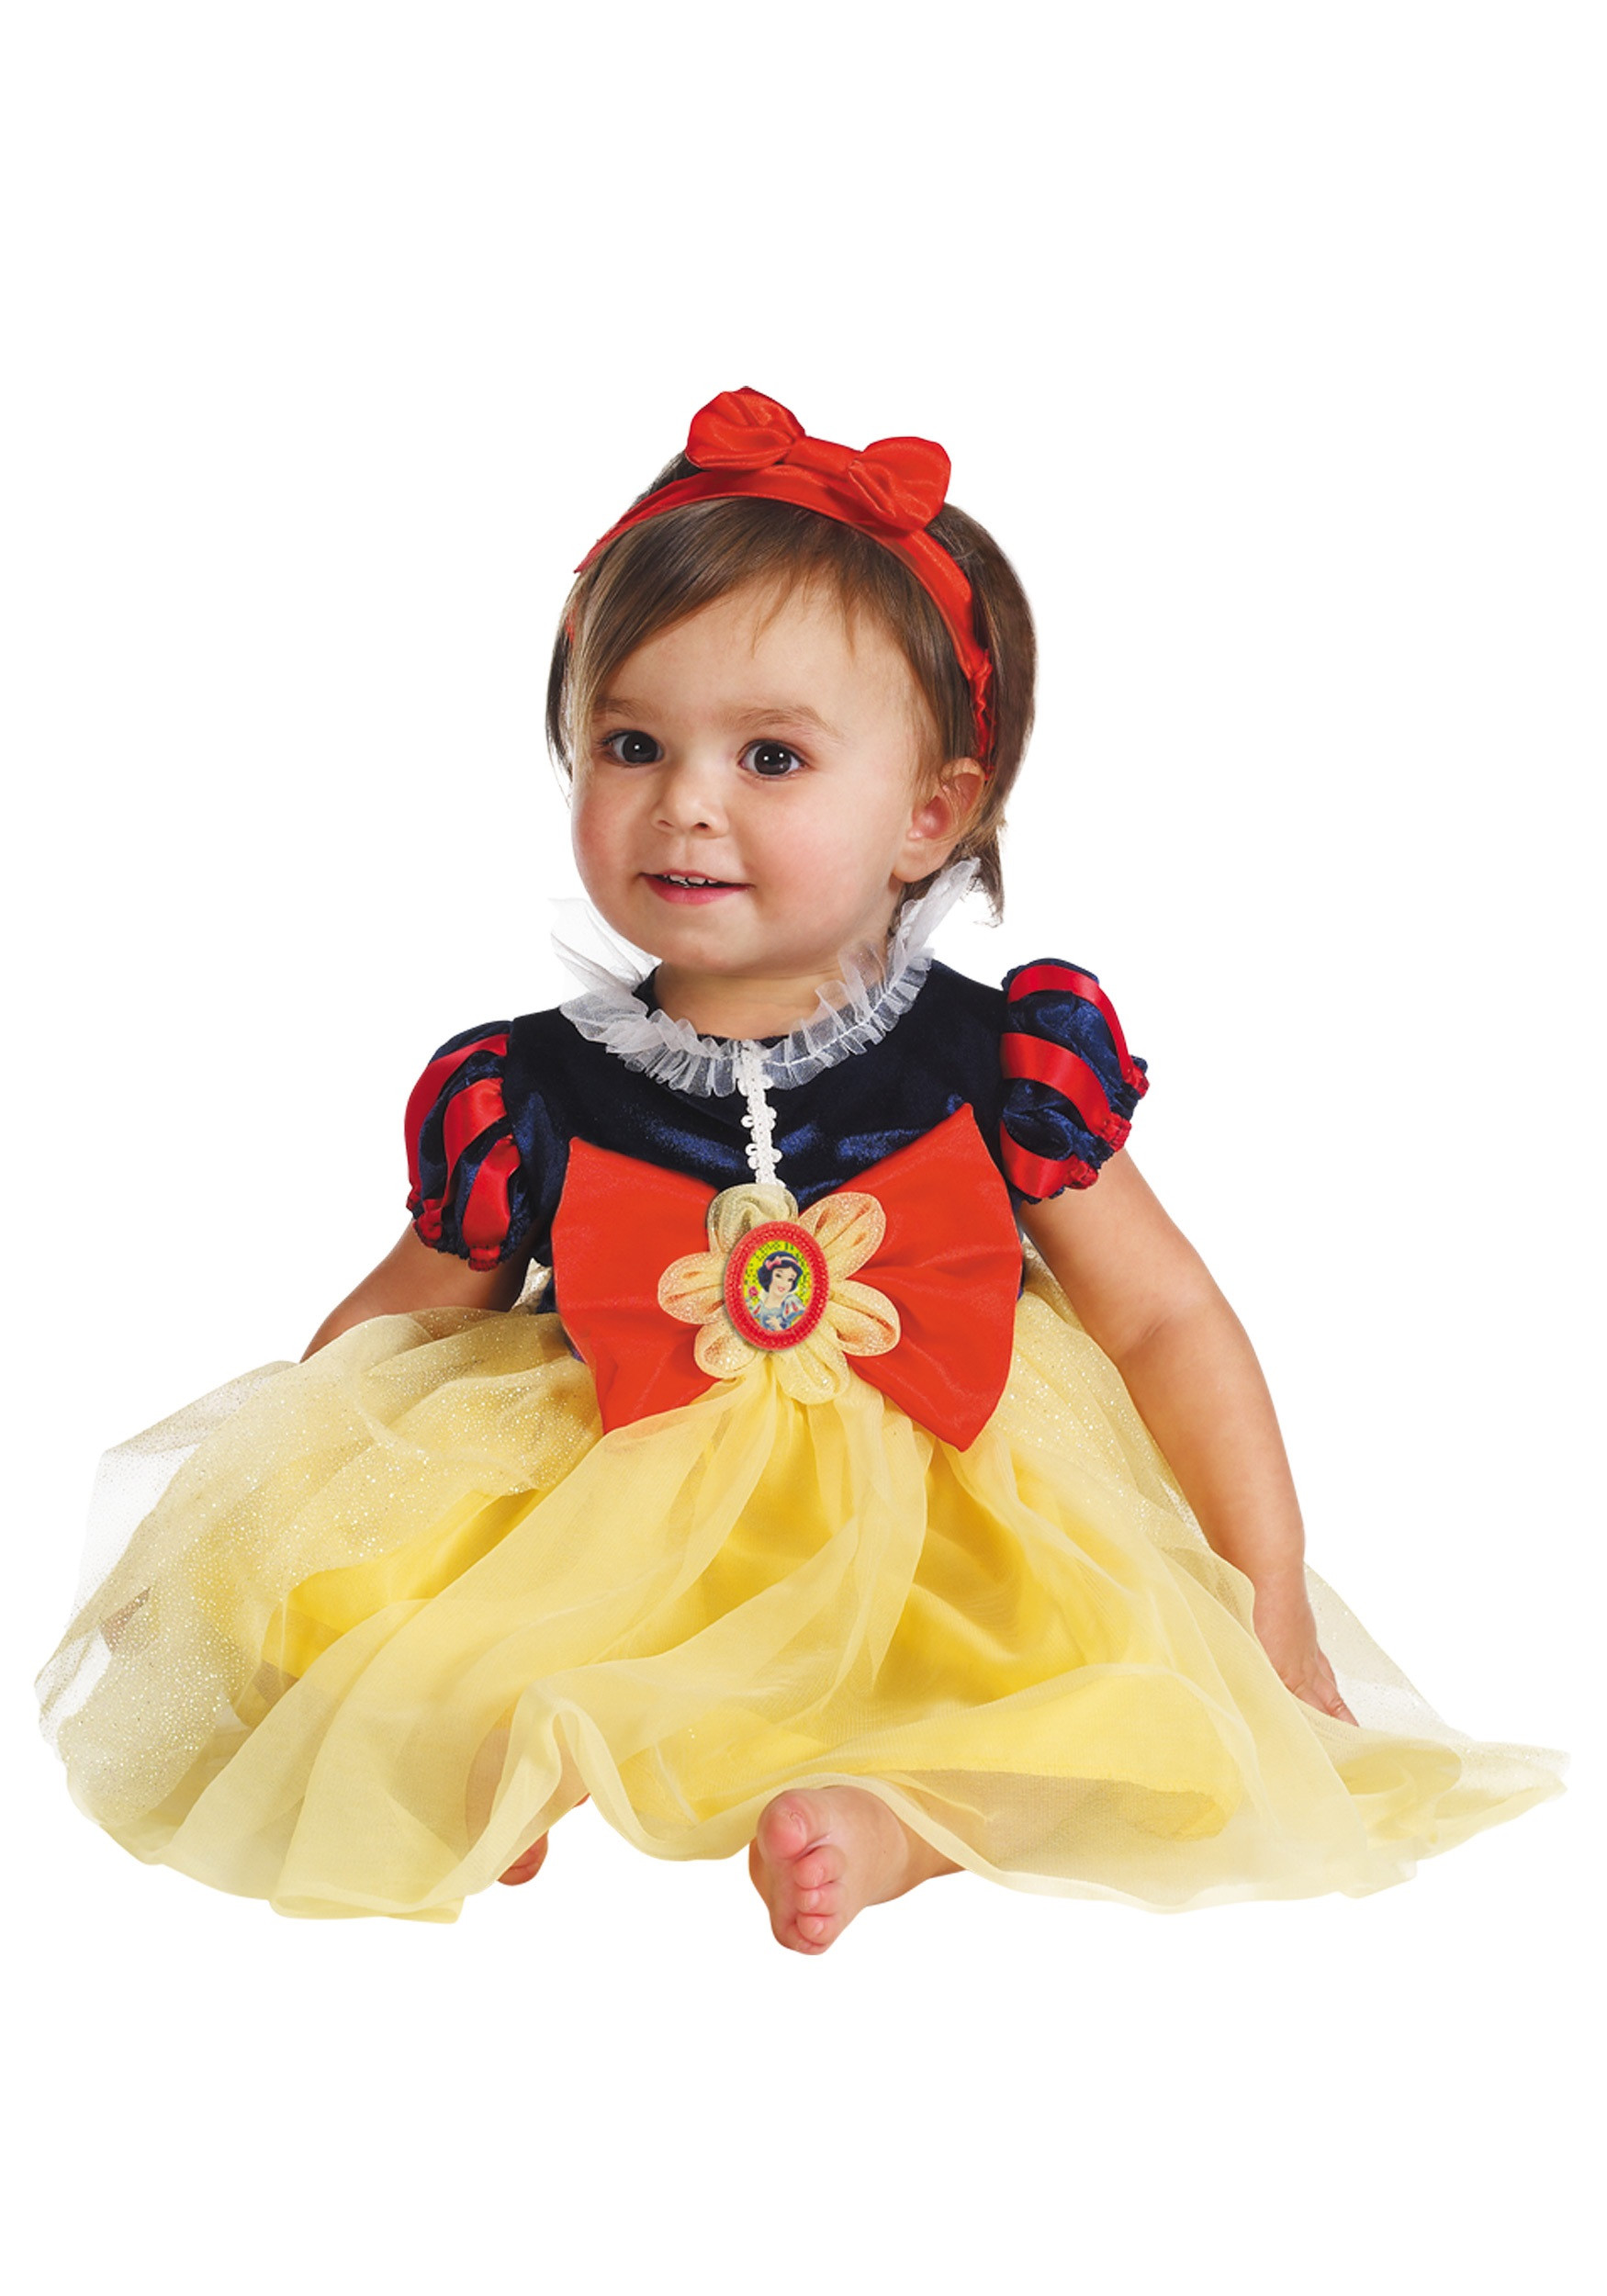 DIY Snow White Costume Toddler
 Infant Snow White My First Disney Costume